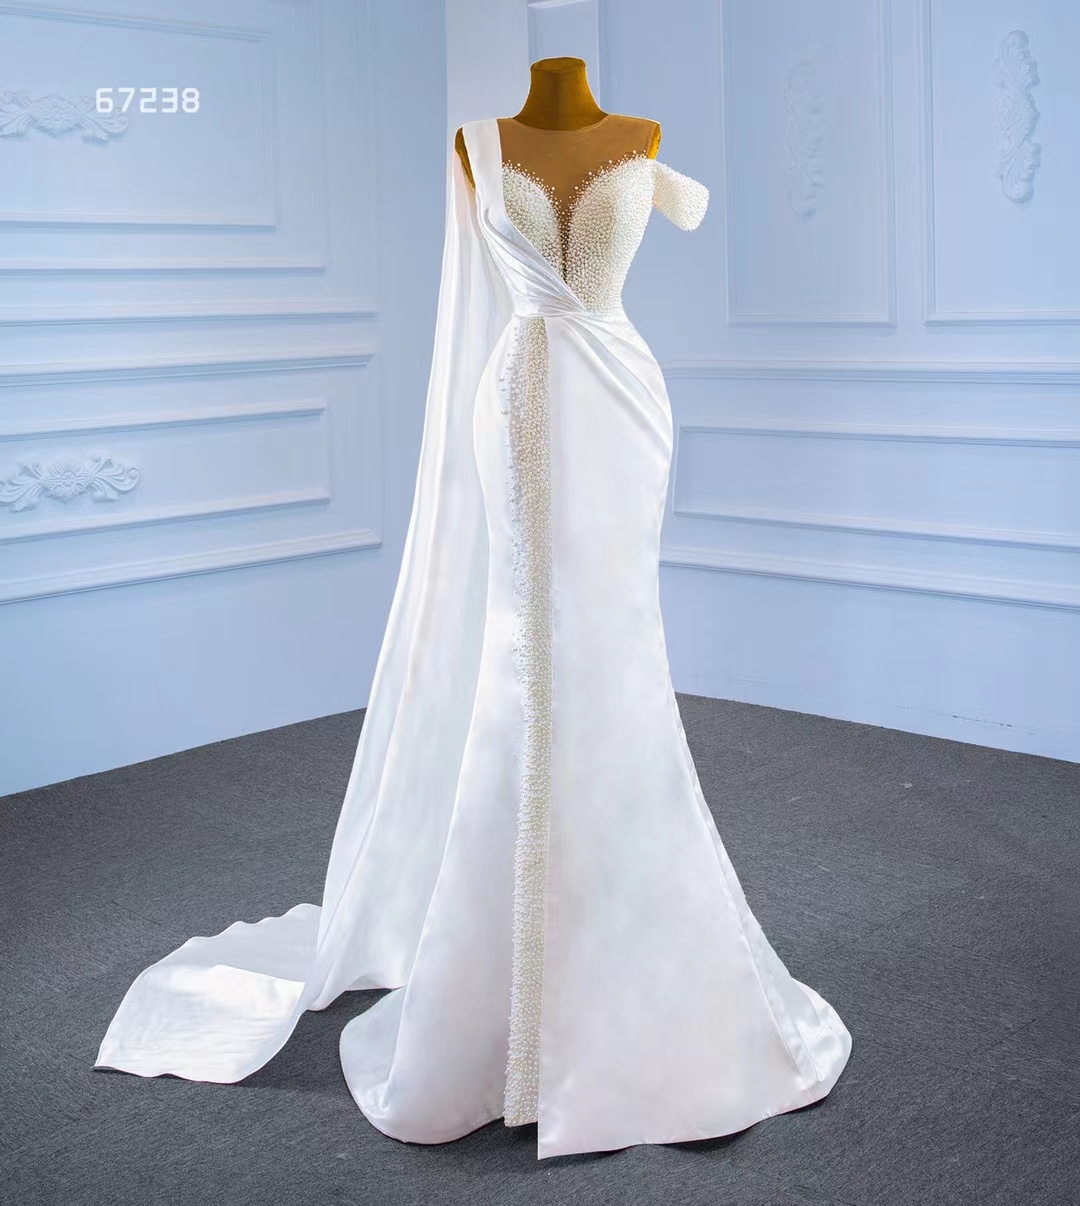 Perles de luxe une épaule queue de sirène robe de mariée robe de mariée SM67238